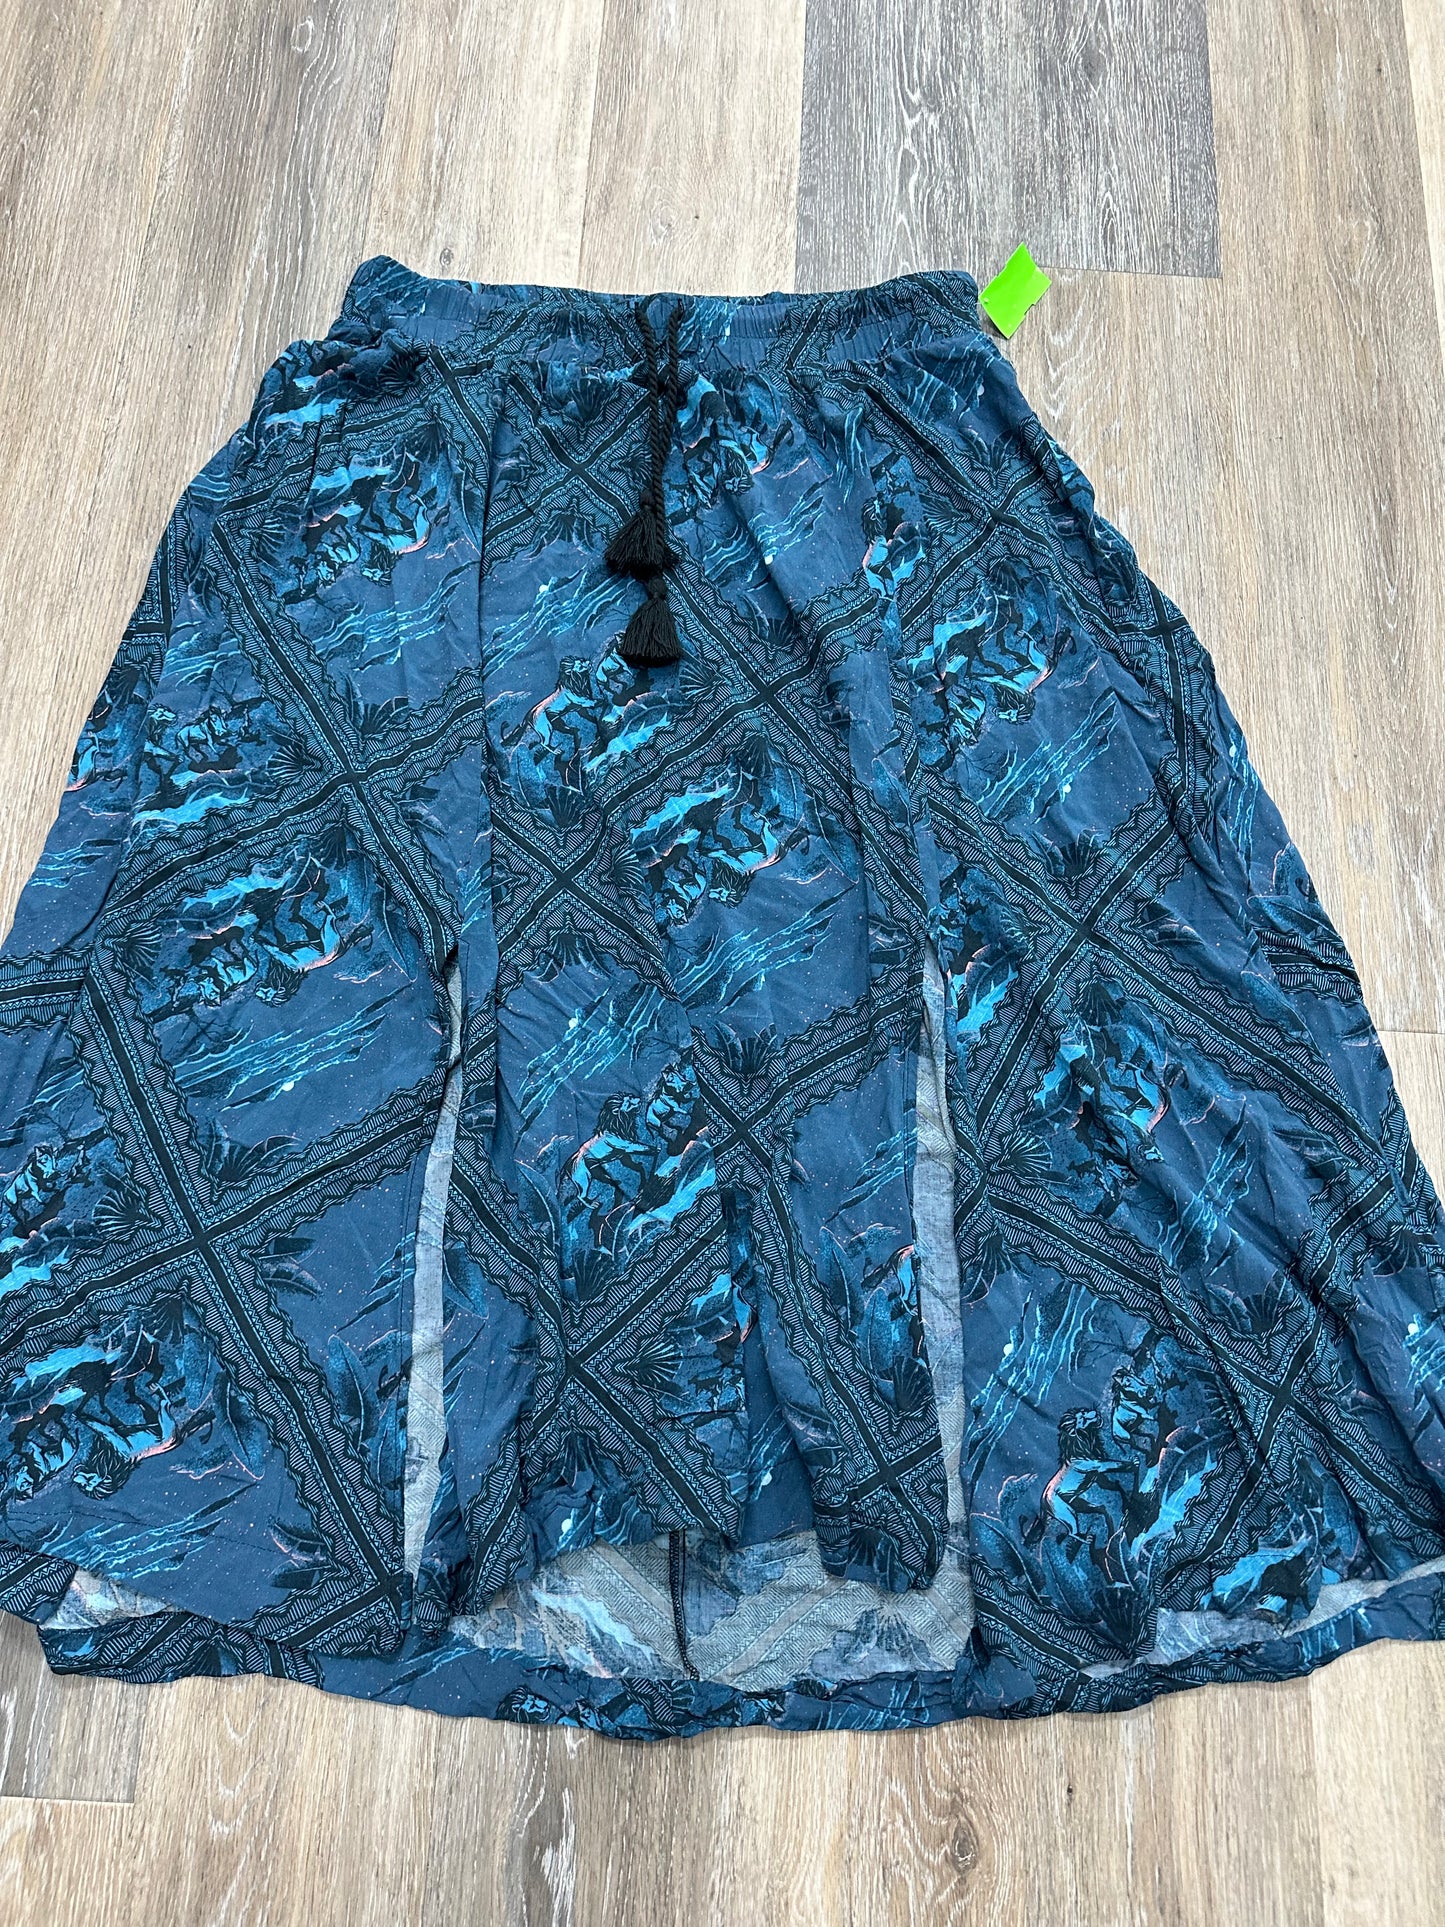 Skirt Midi By Disney Store  Size: 2x